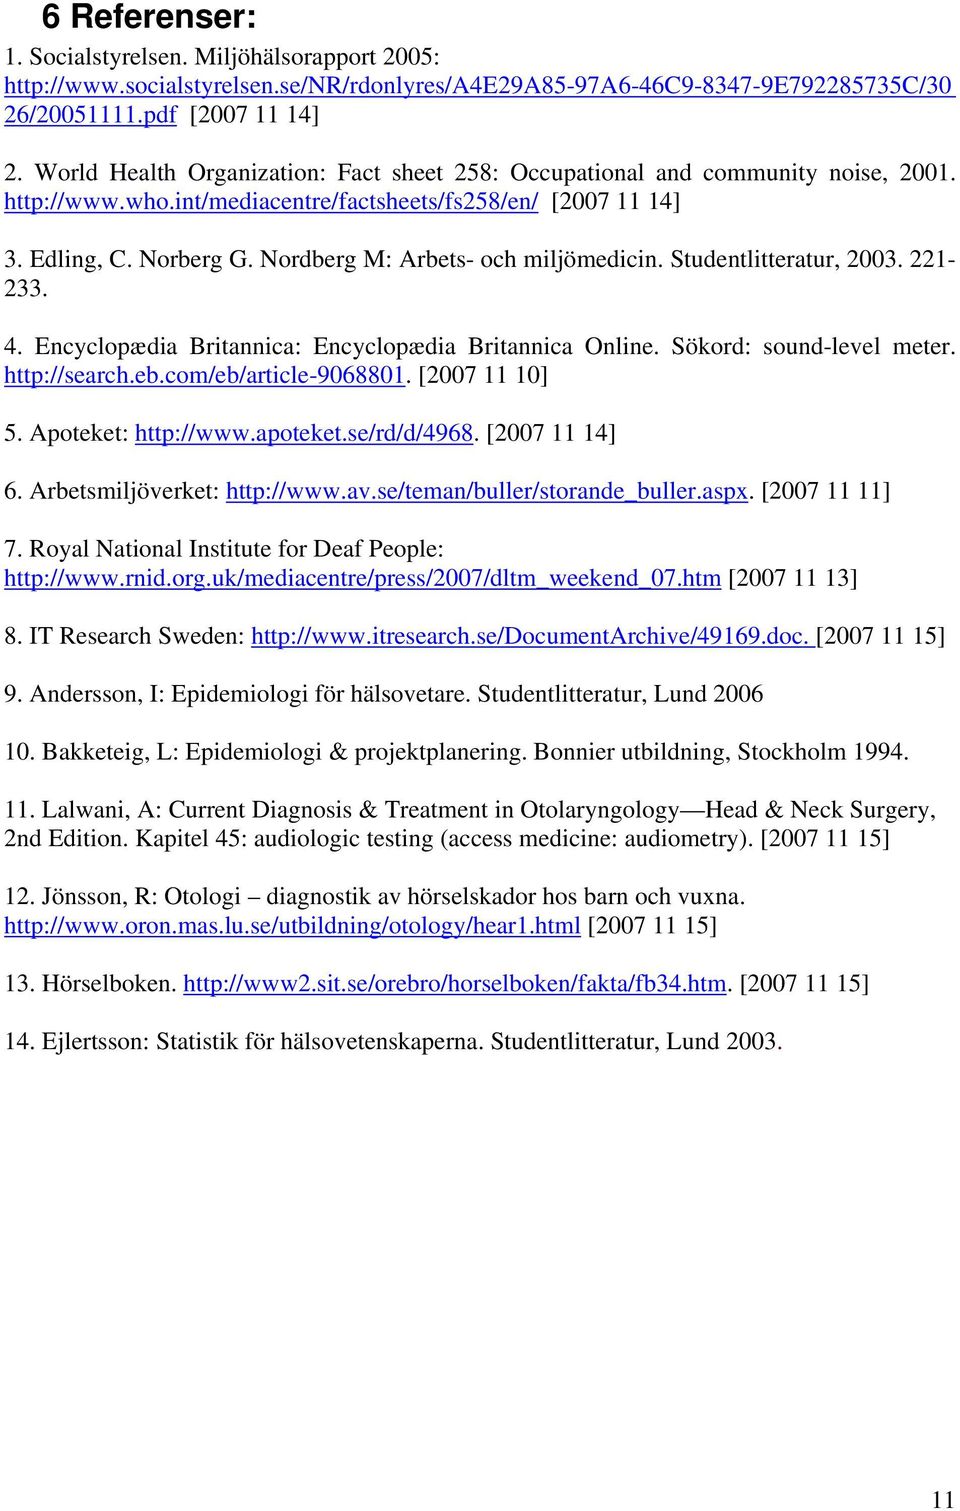 Nordberg M: Arbets- och miljömedicin. Studentlitteratur, 2003. 221-233. 4. Encyclopædia Britannica: Encyclopædia Britannica Online. Sökord: sound-level meter. http://search.eb.com/eb/article-9068801.